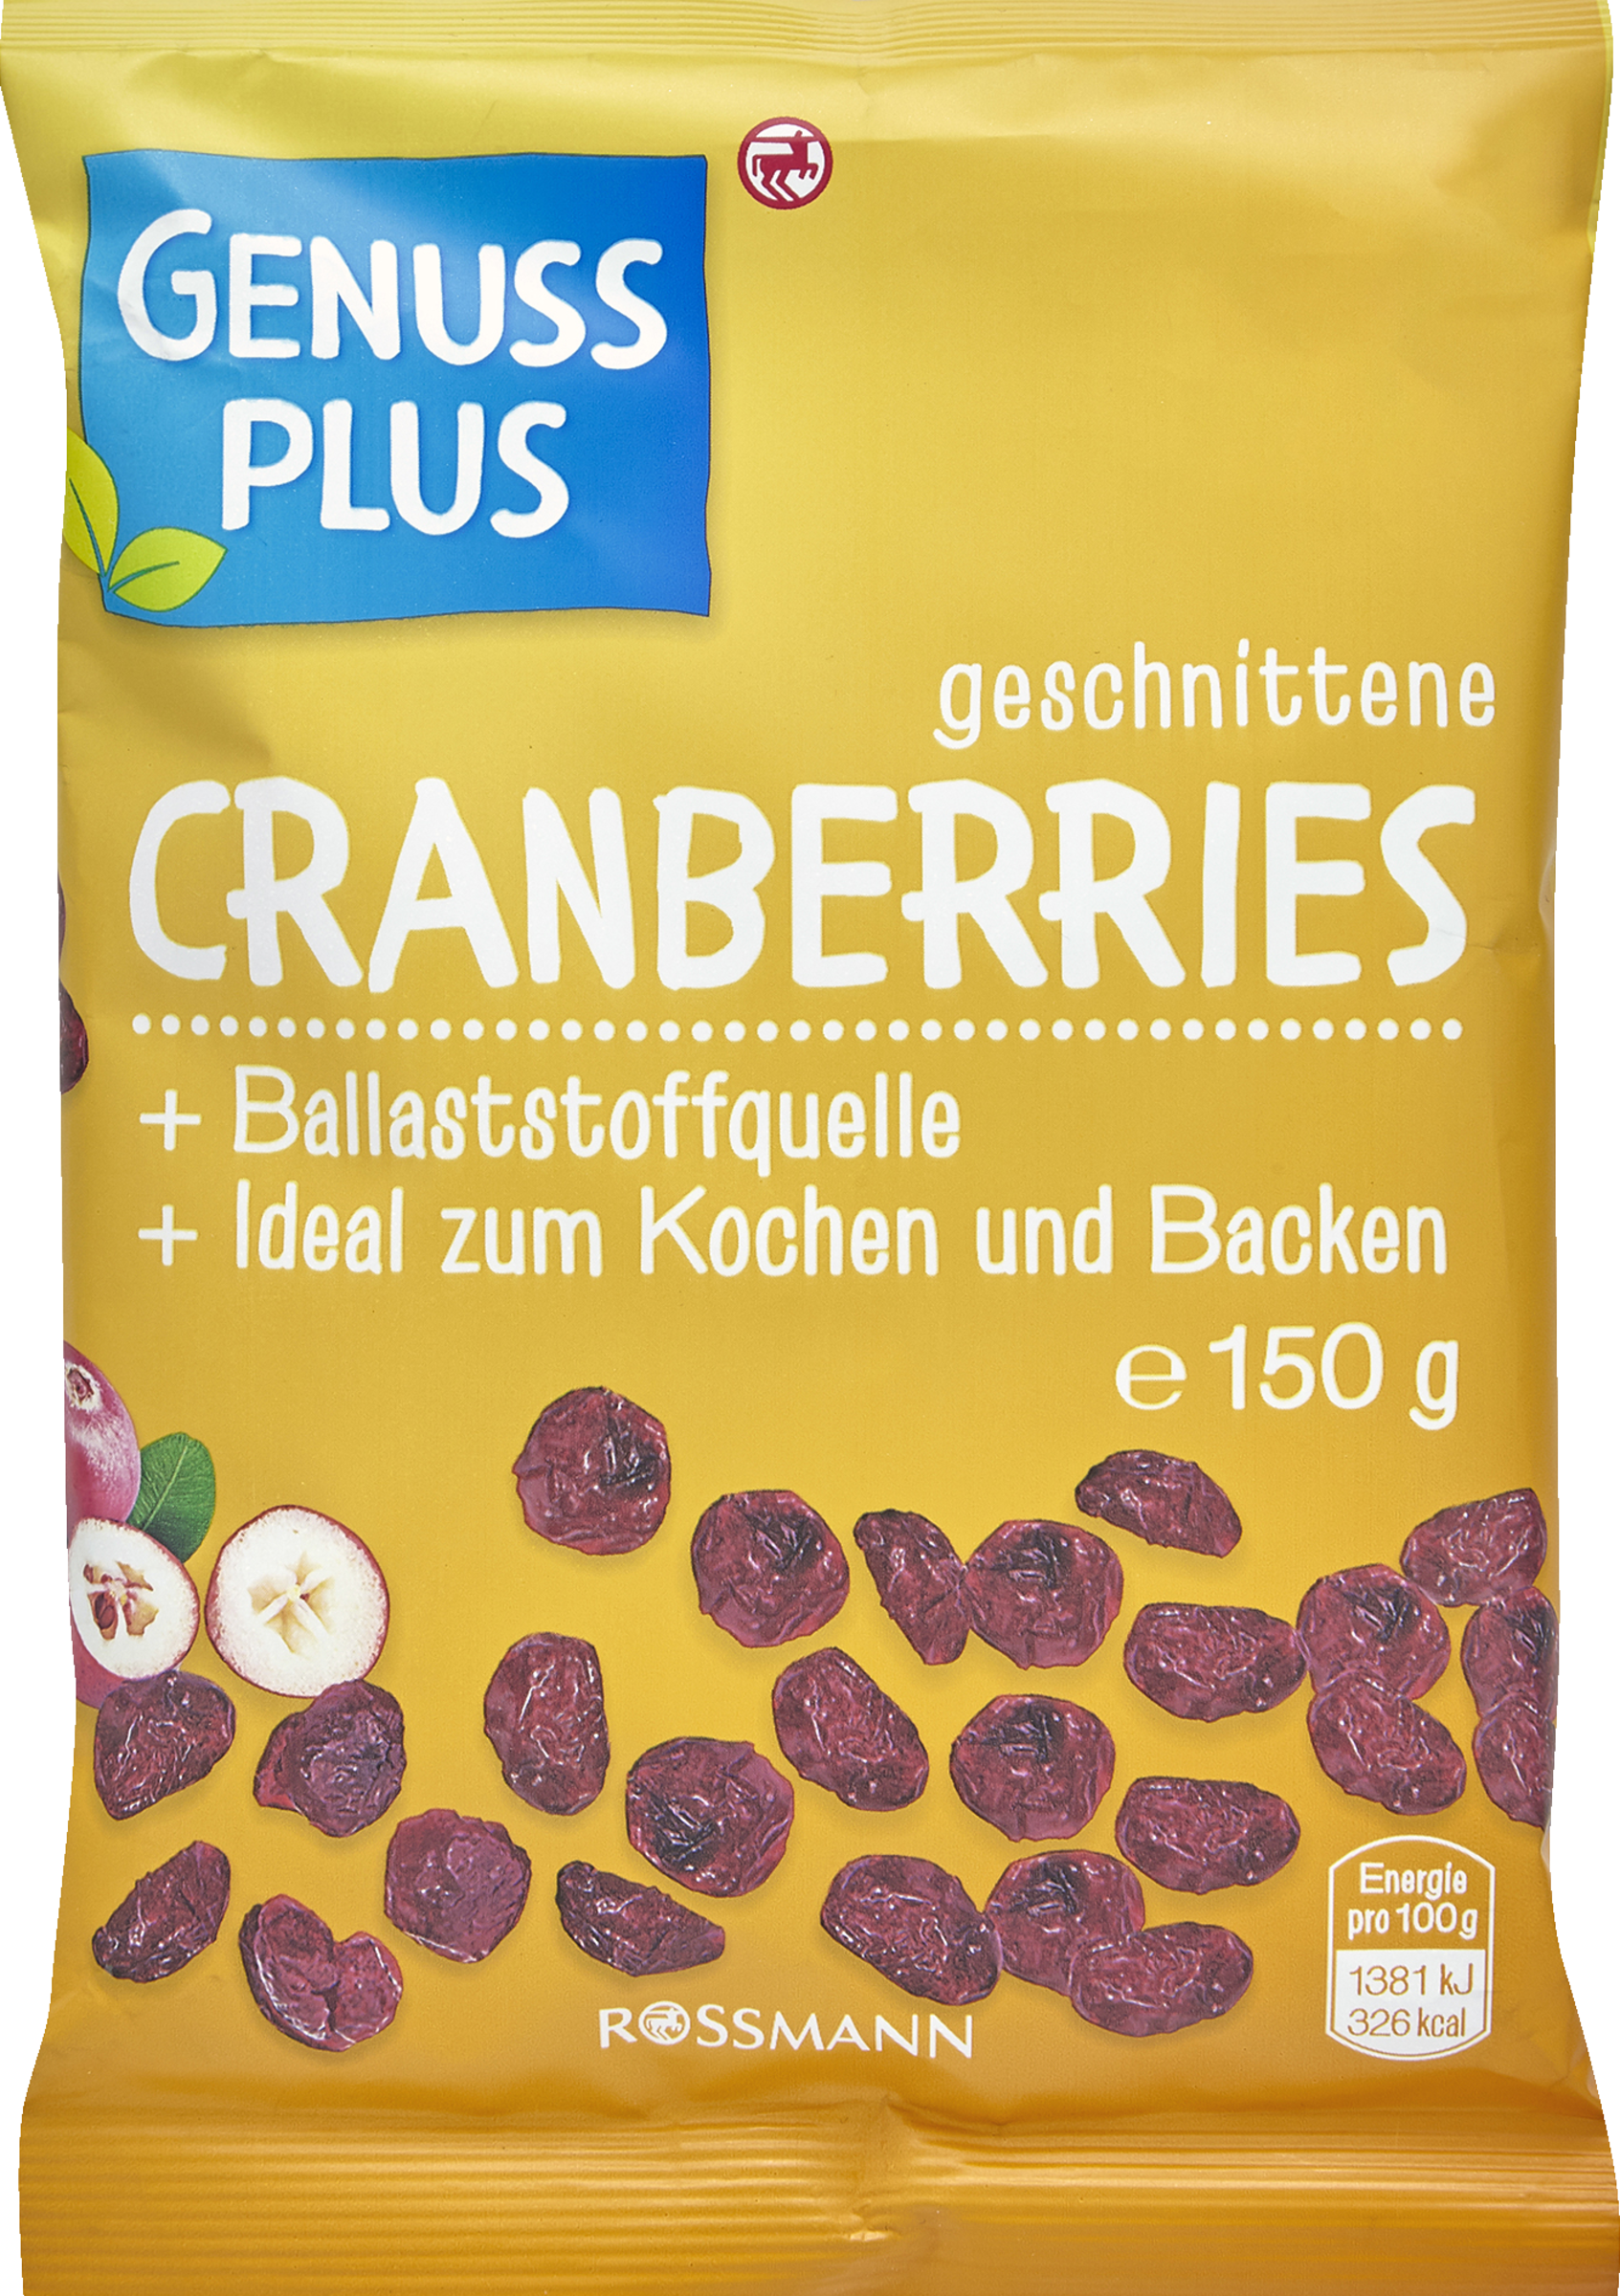 GENUSS PLUS geschnittene Cranberries online kaufen | rossmann.de